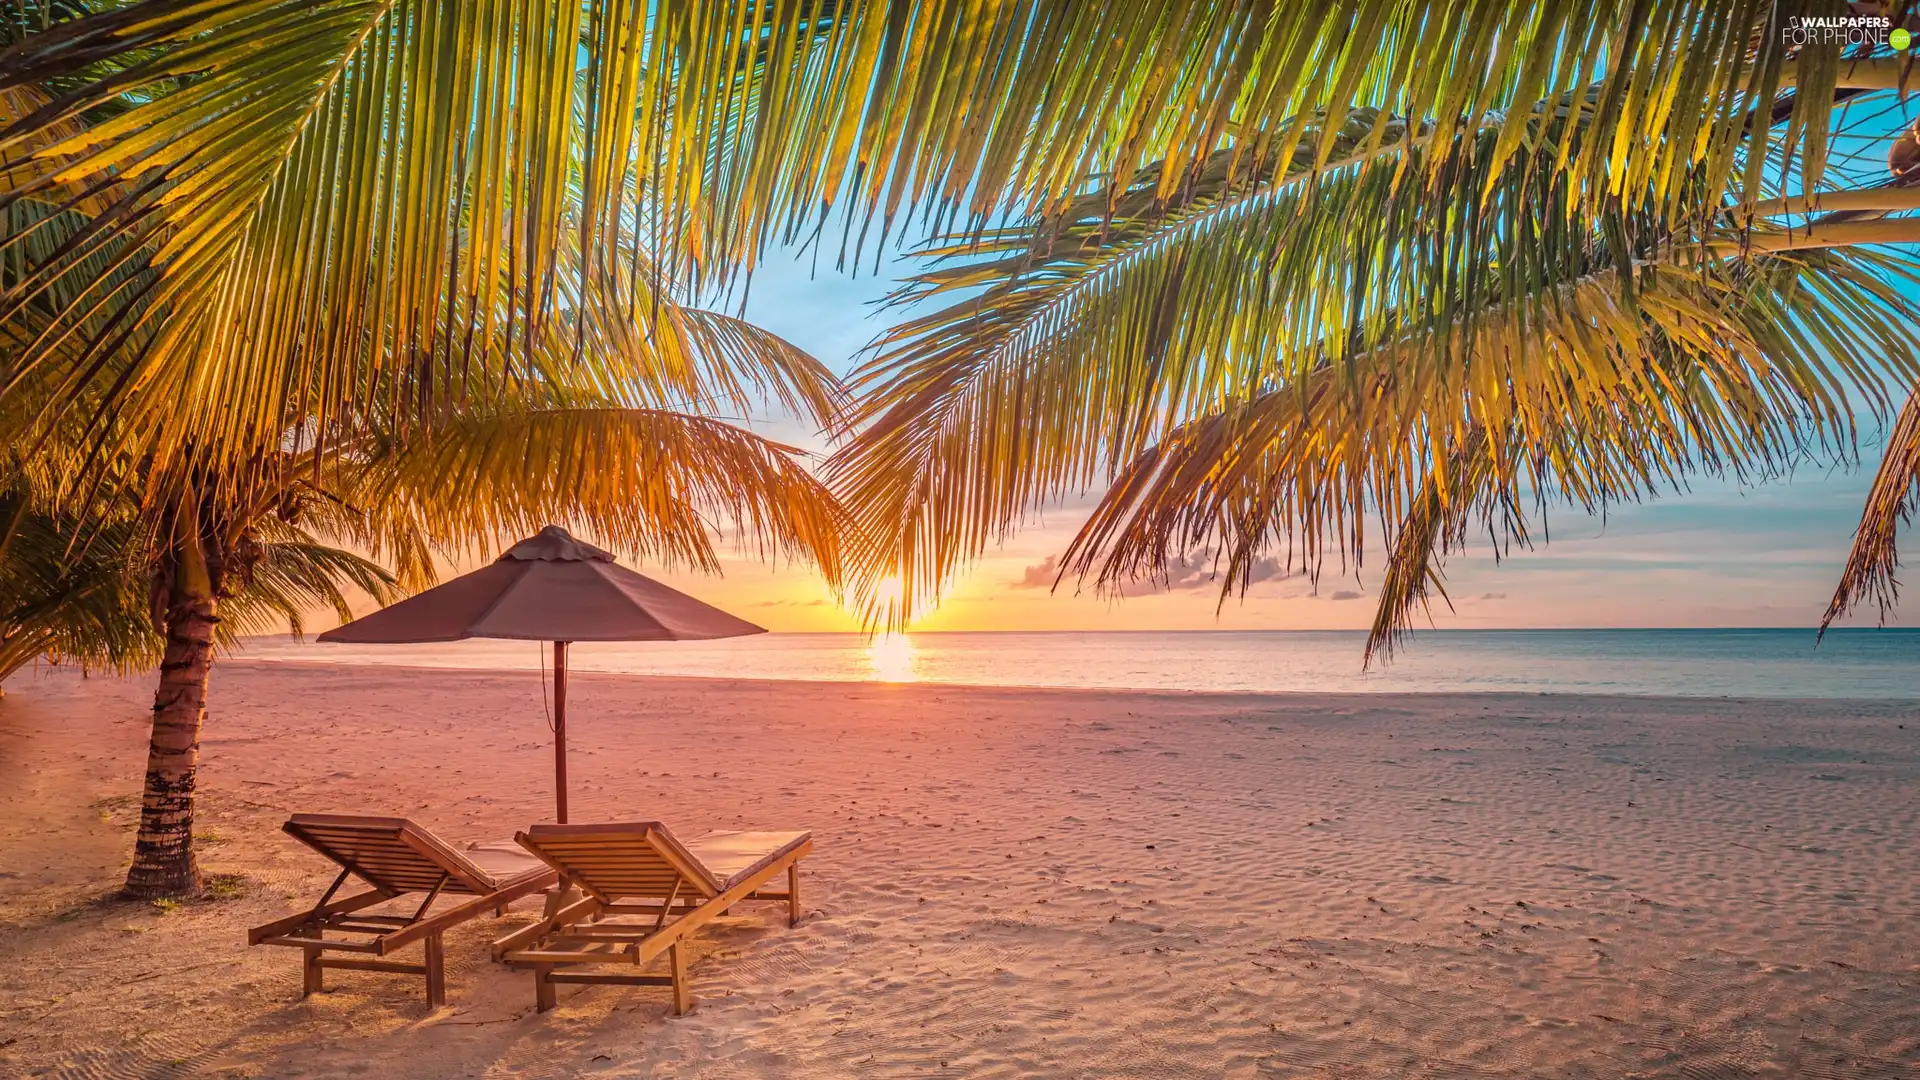 Palms, sea, Umbrella, Beaches, Maldives, deck chair, Great Sunsets